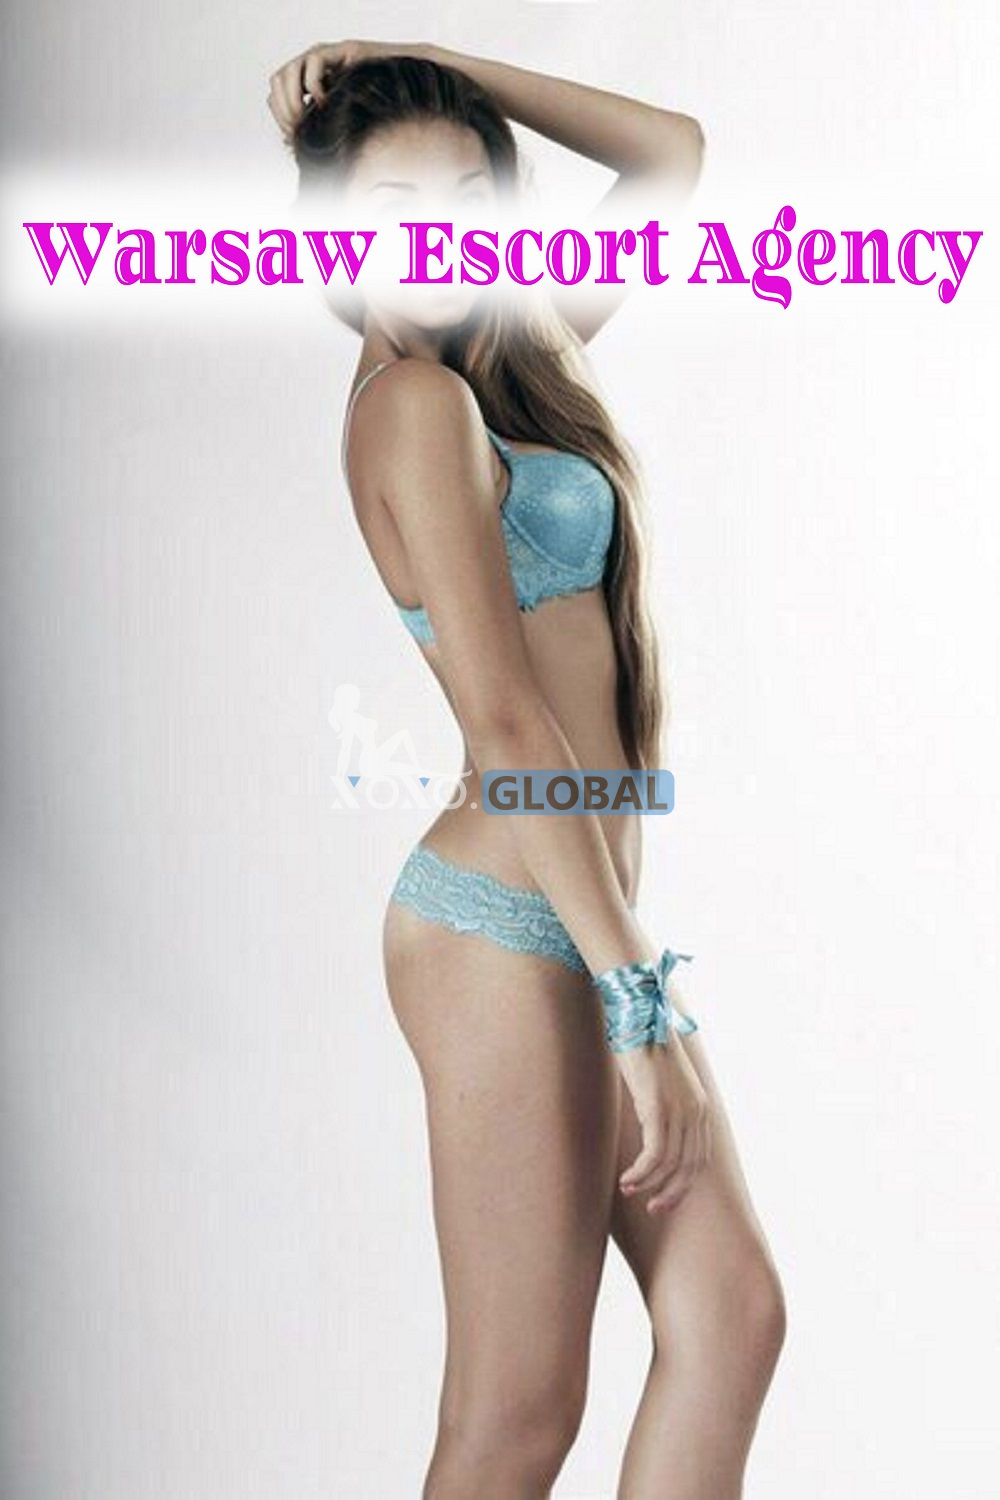 Agency Warsaw Escort Agency